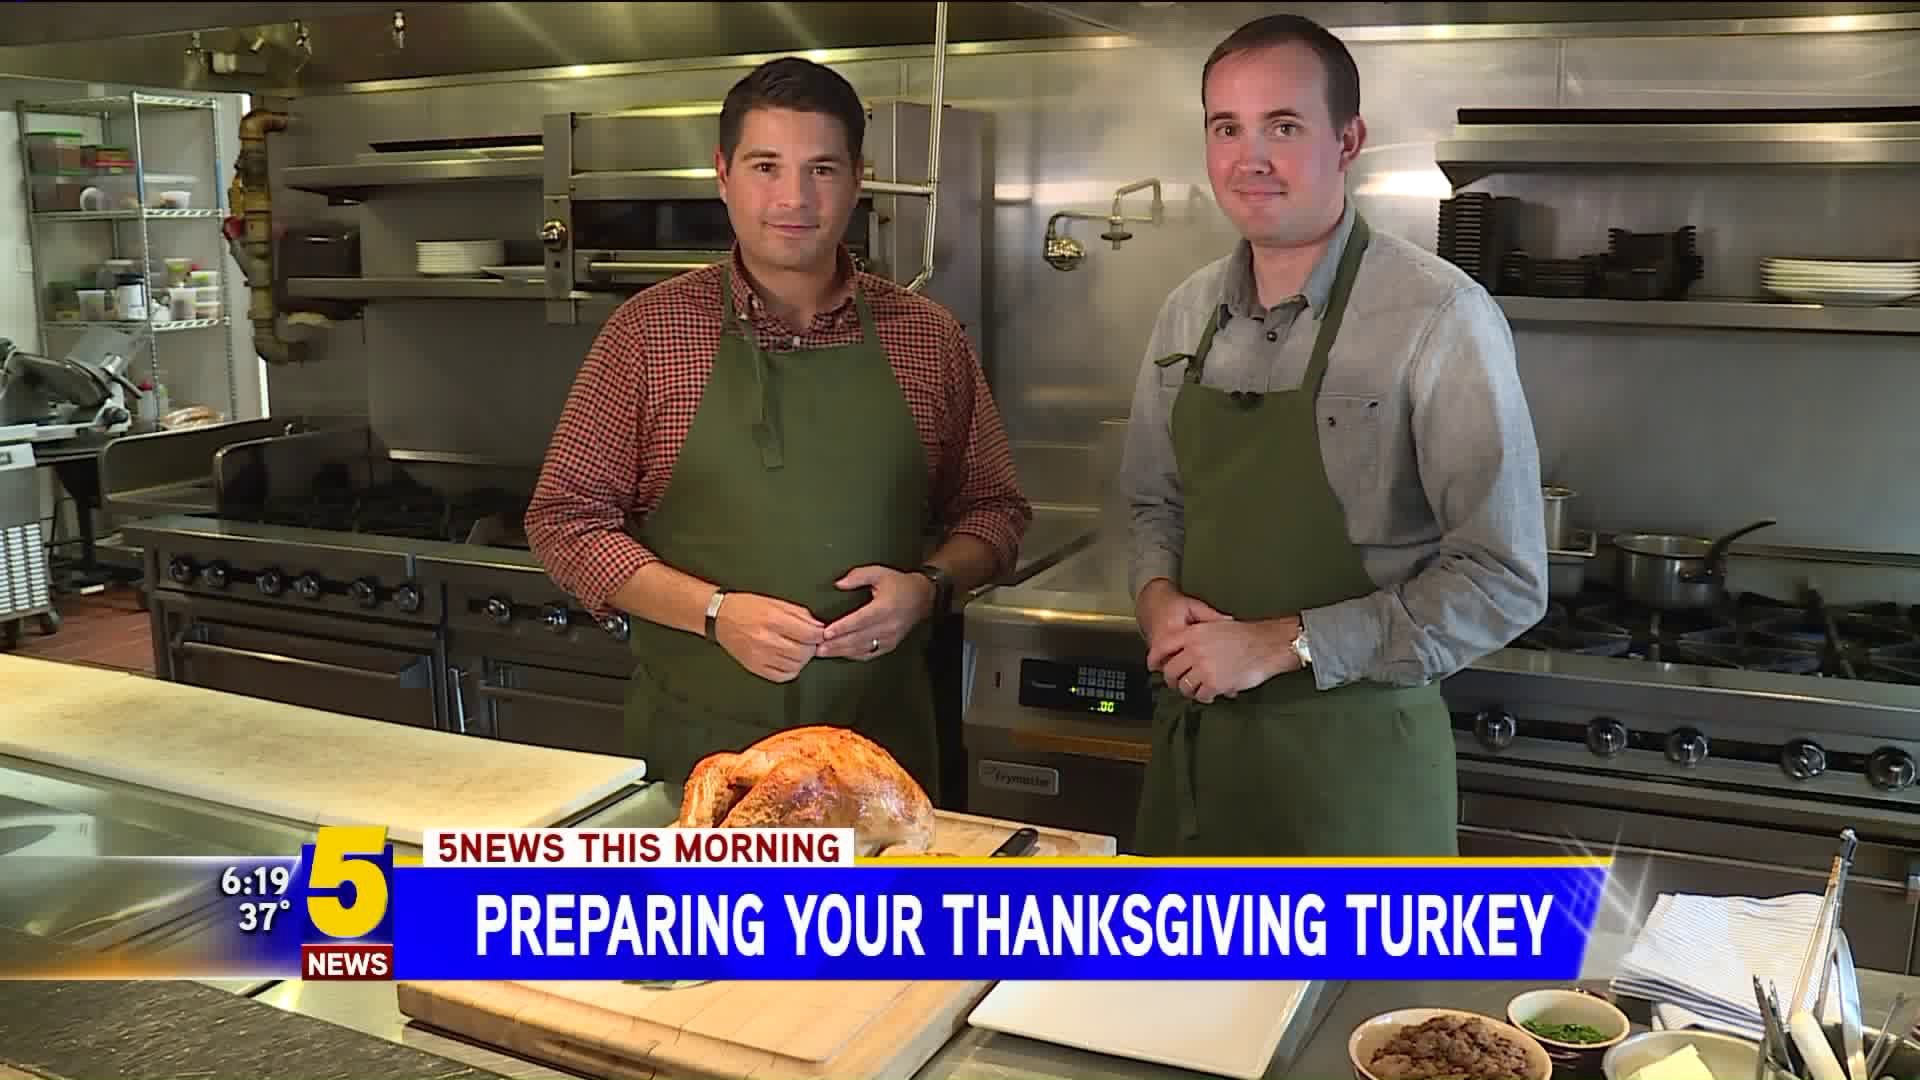 Preparing You Thanksgiving Turkey on 5NEWS This Morning